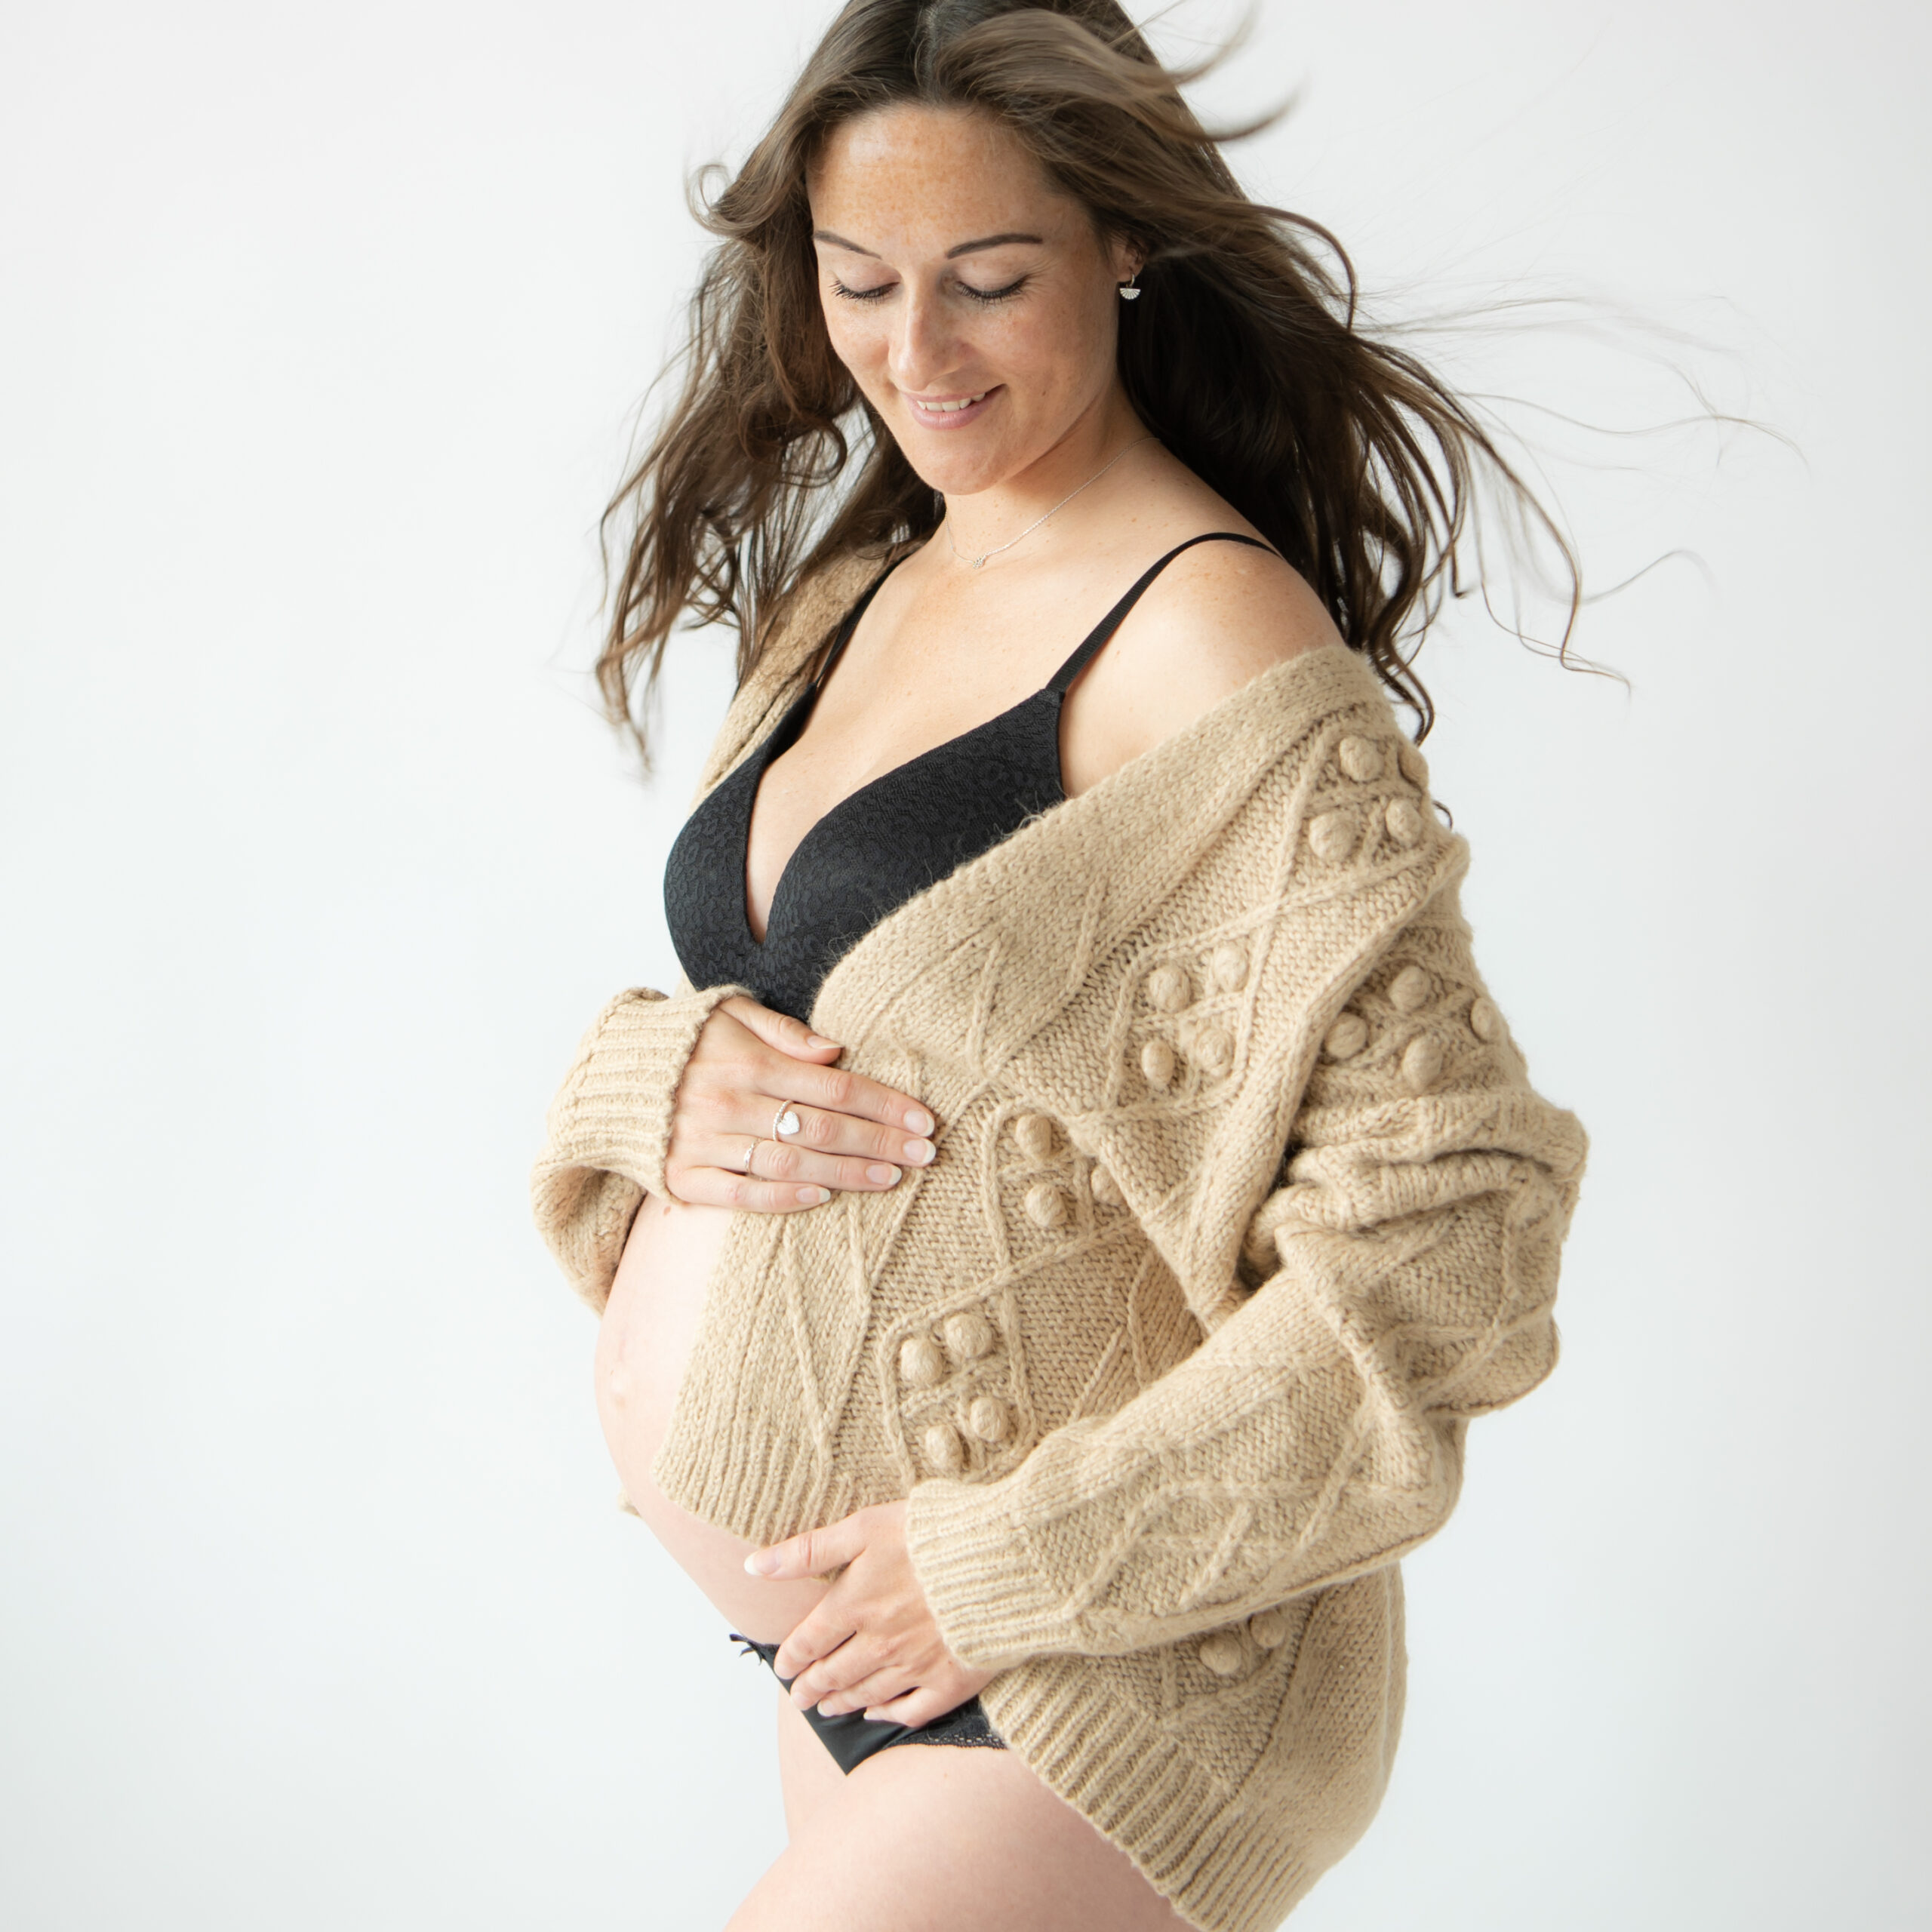 zwangerschapsfotograaf kiezen